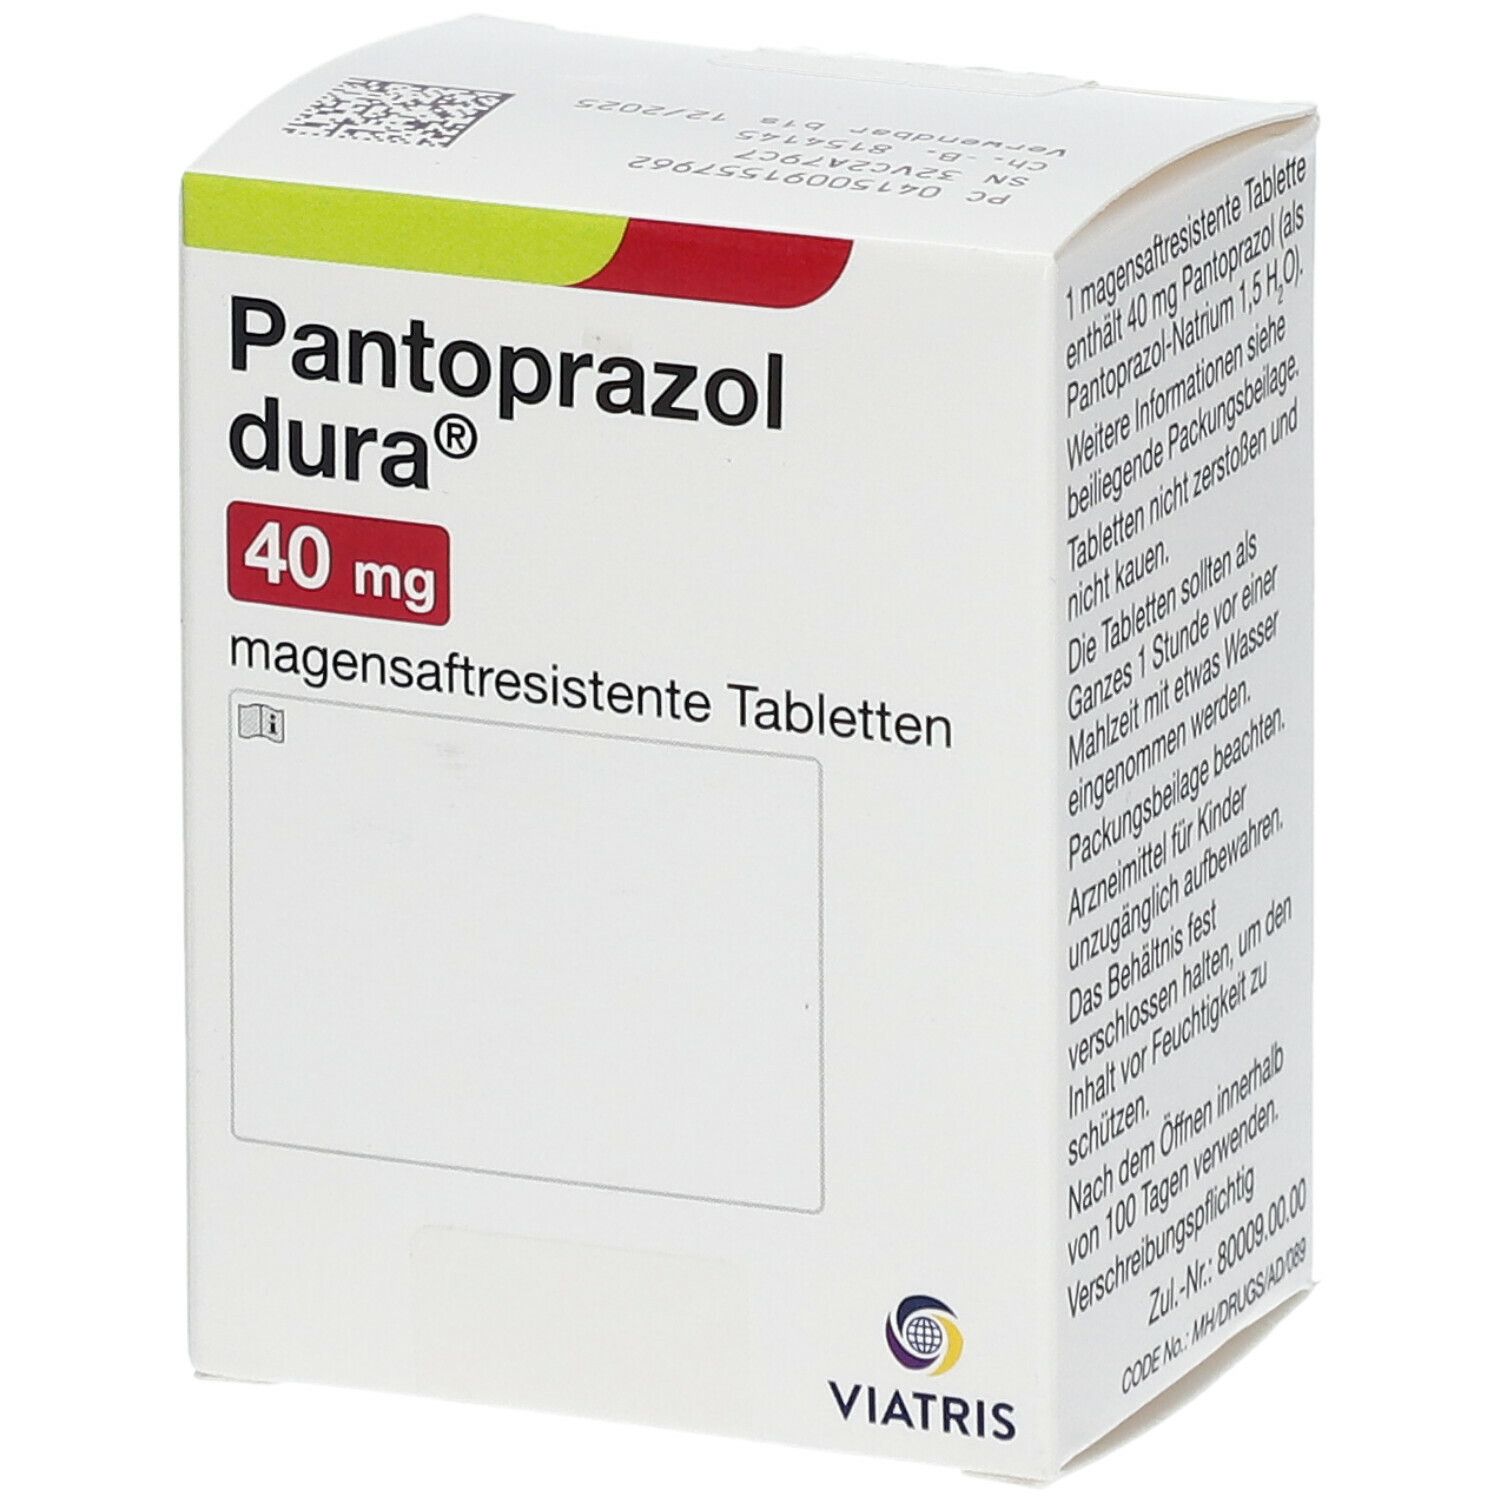 Pantoprazol dura® 40 mg